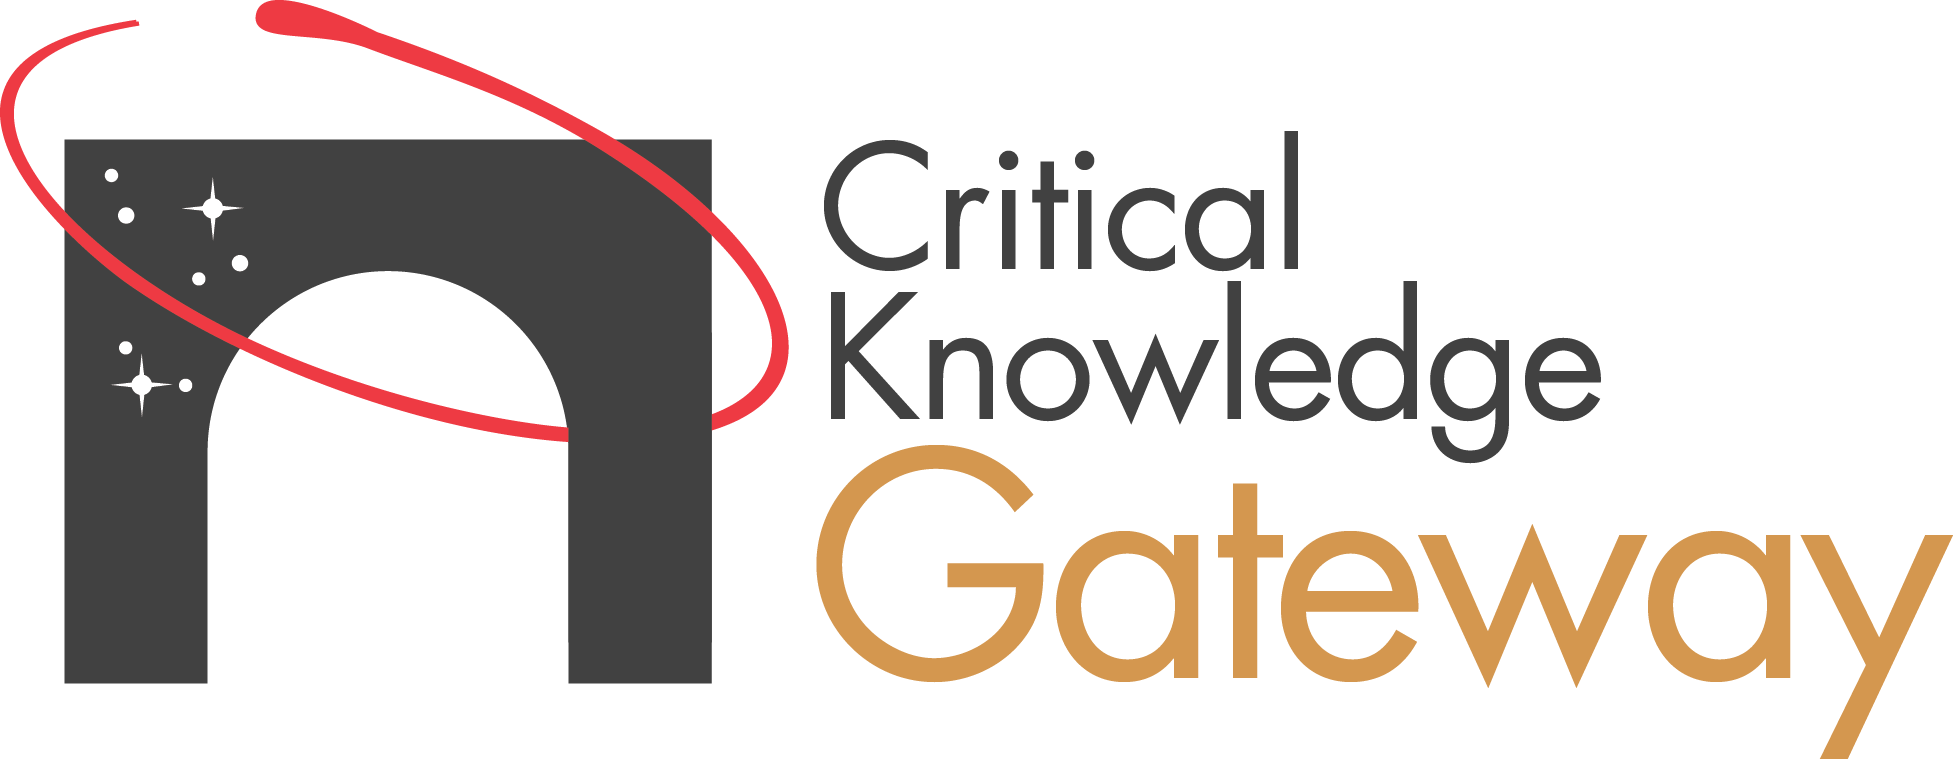 Gateway Logo - Critical Knowledge Gateway. APPEL Knowledge Services